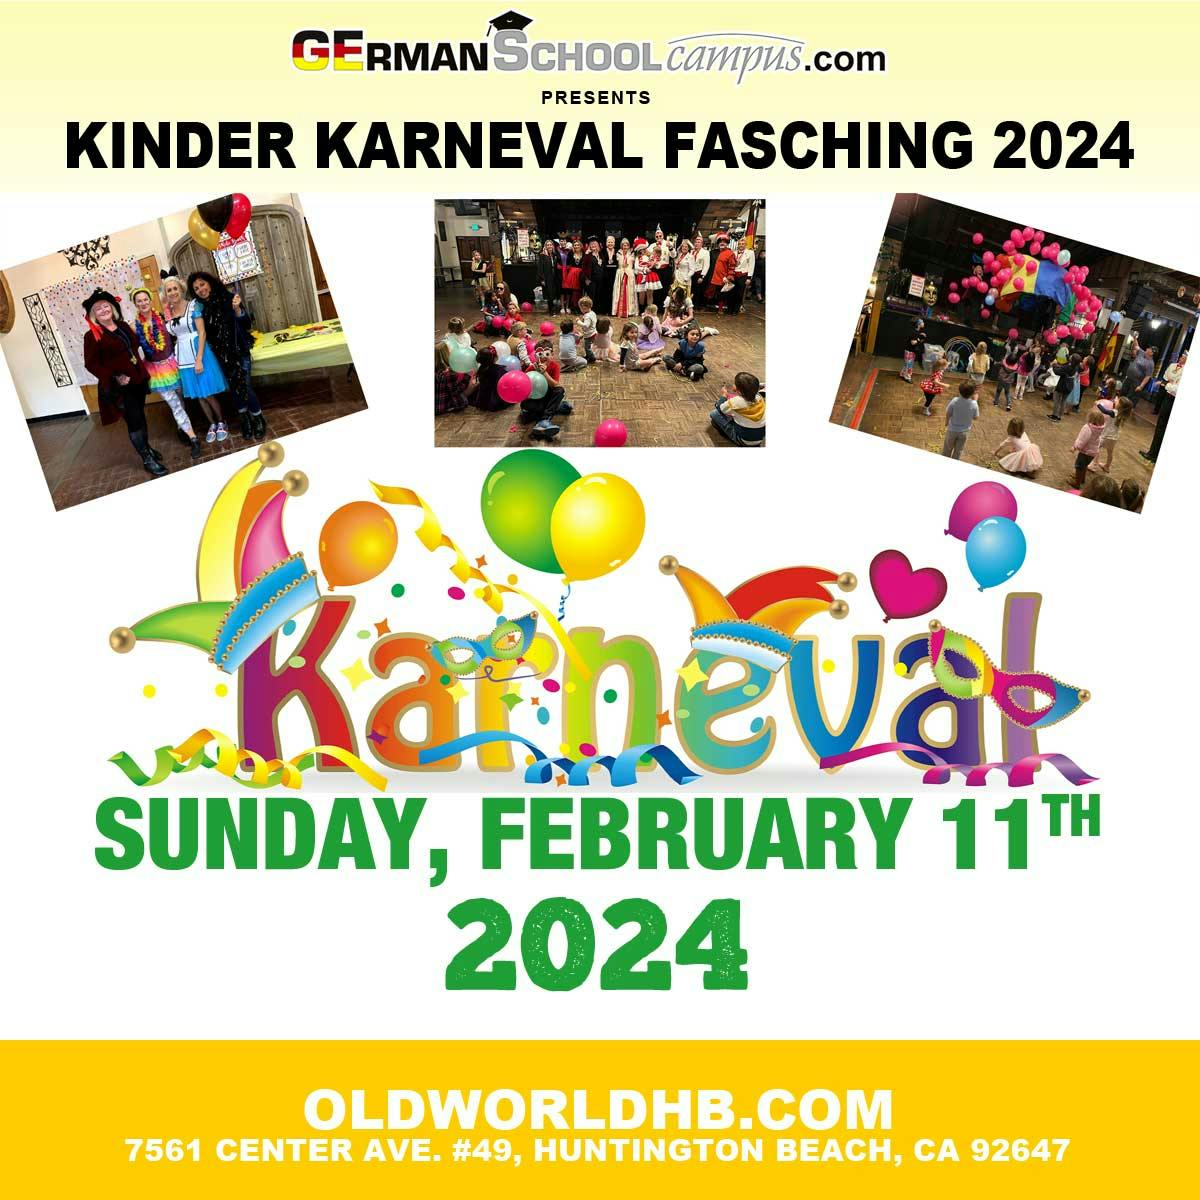 Kinder Karneval Fasching 2024